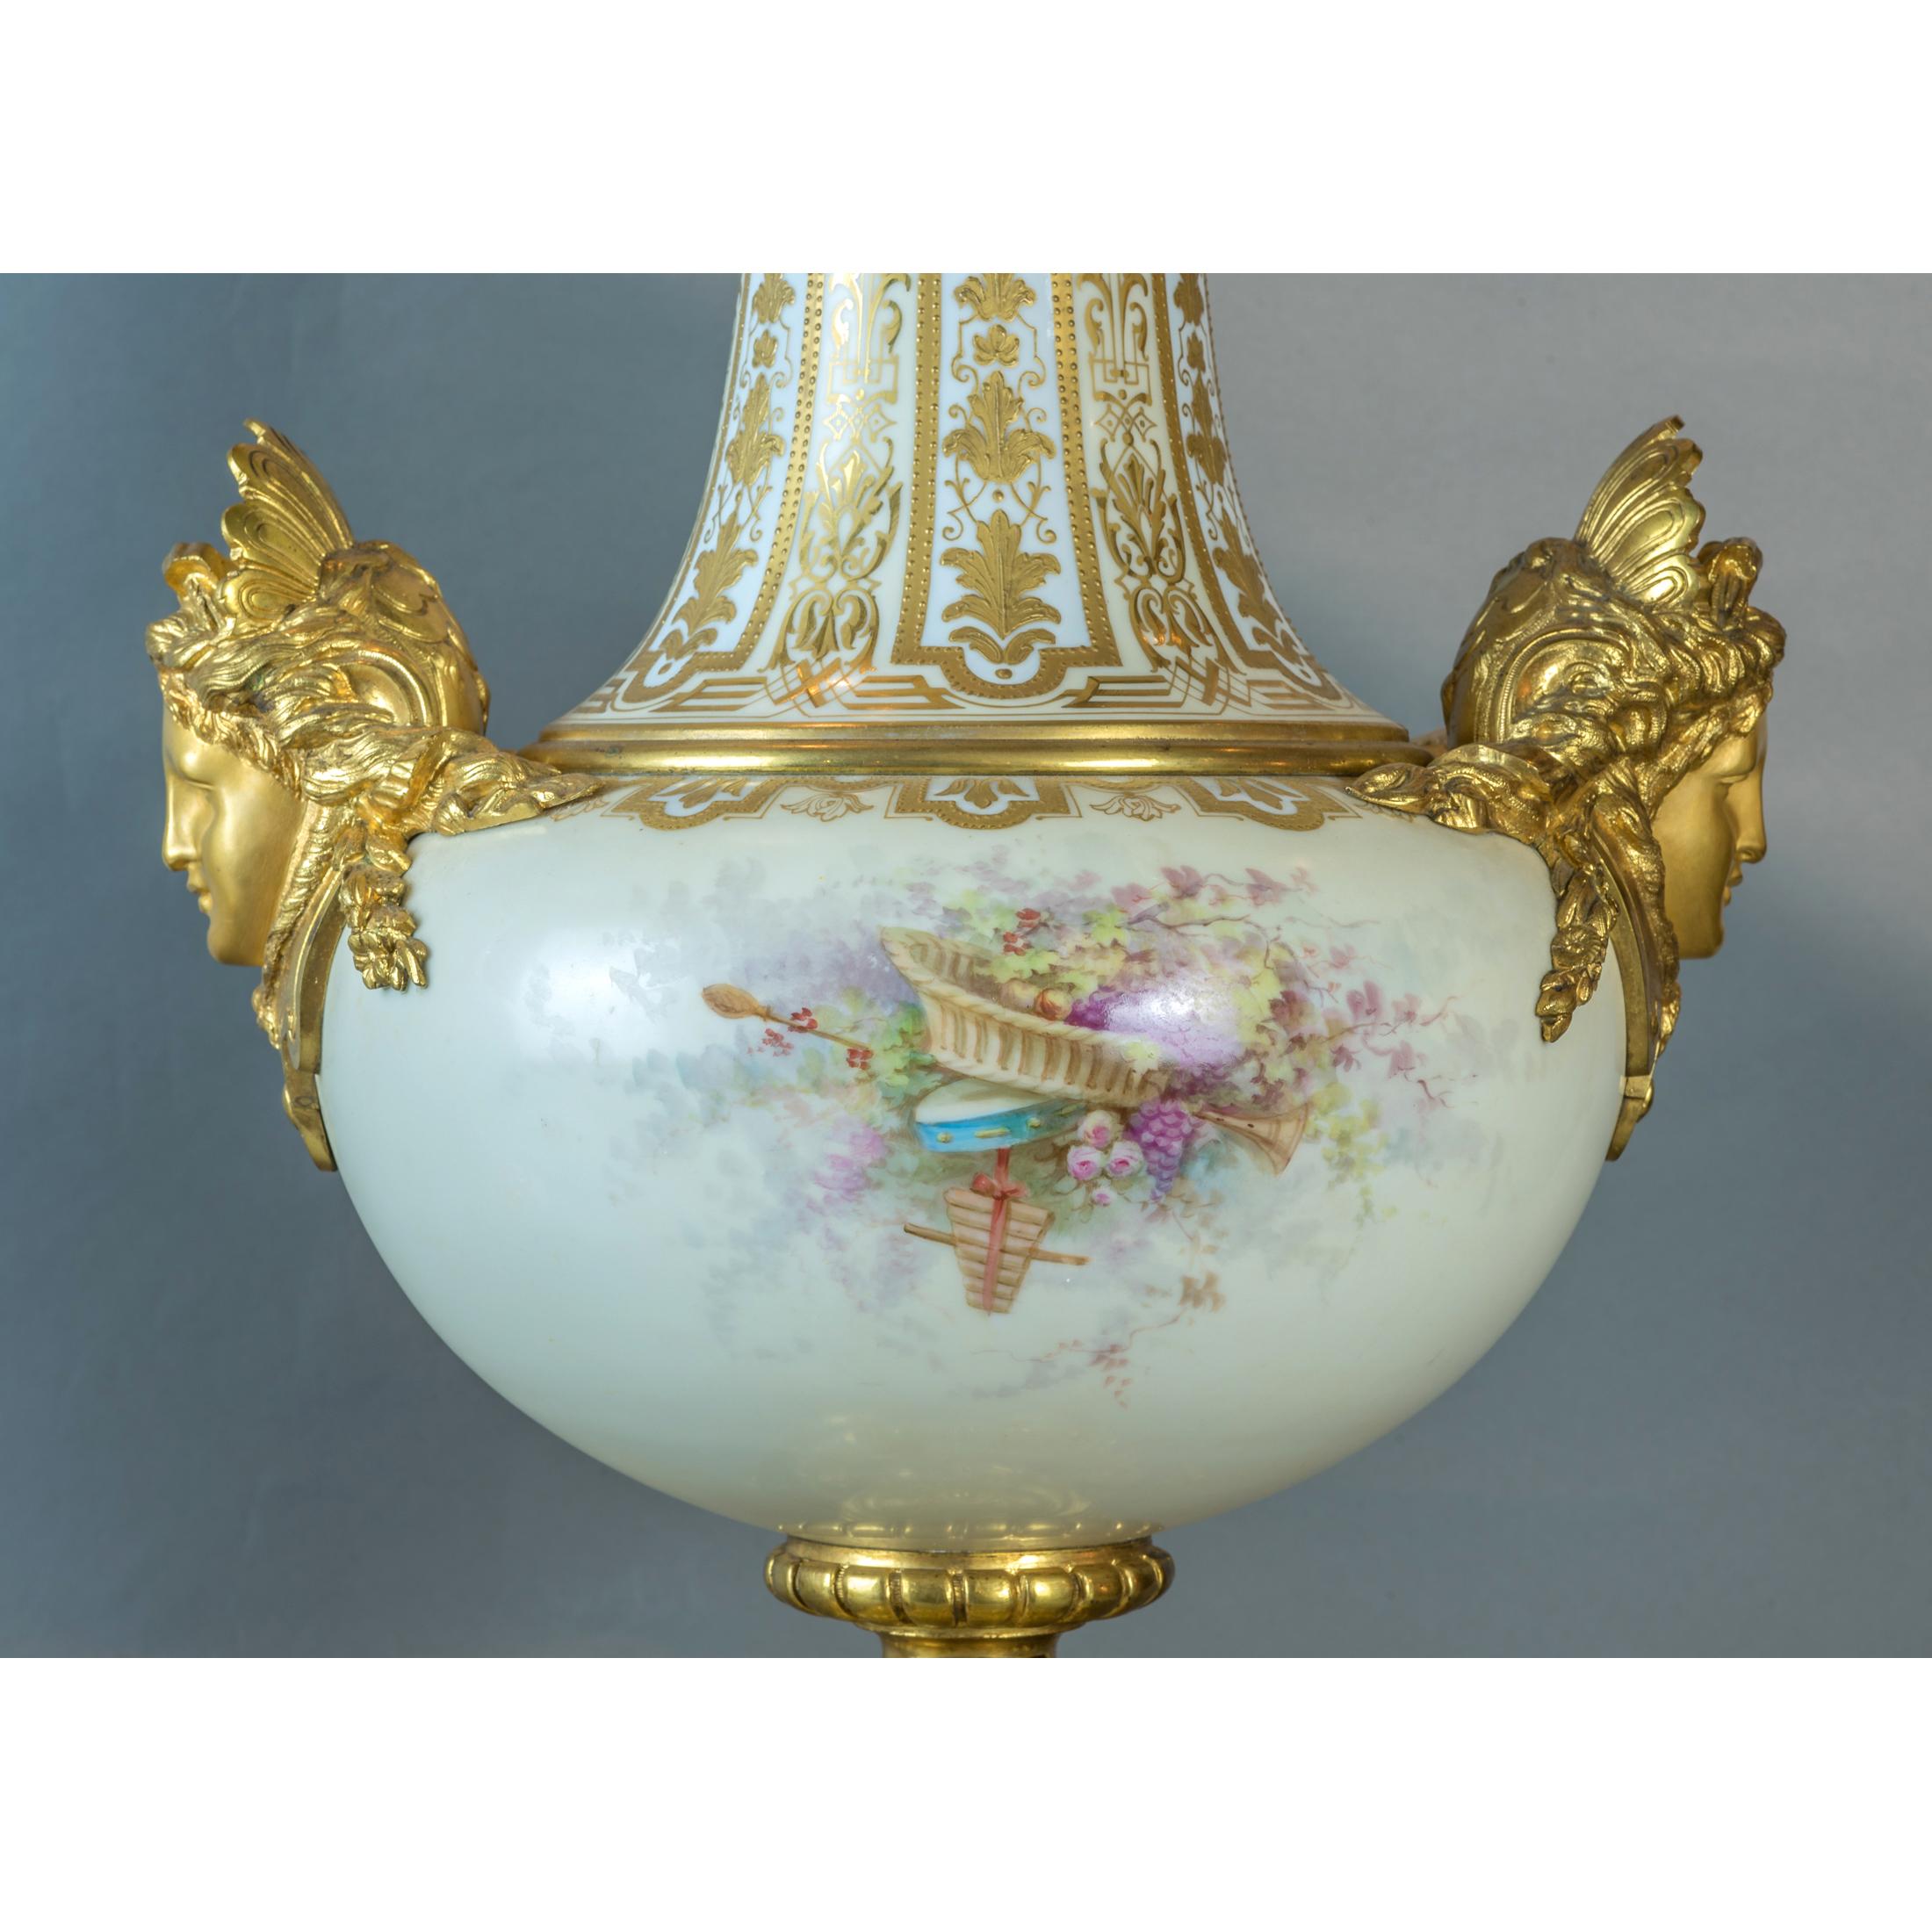 Pair of Ormolu-Mounted Sèvres-style Porcelain Champlevé Vases For Sale 6